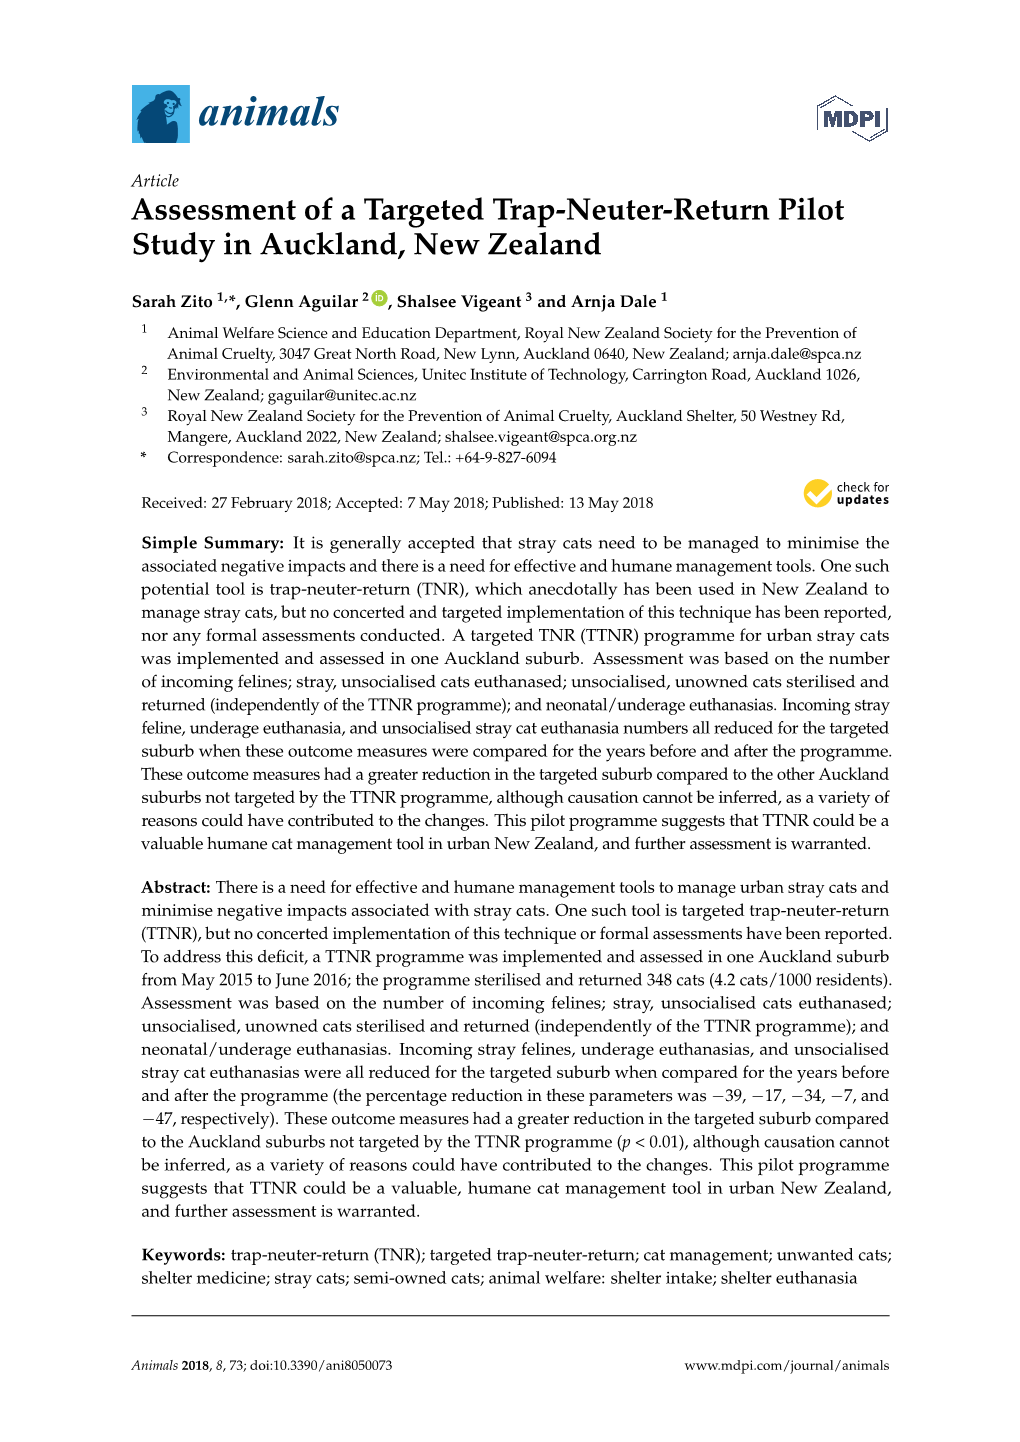 Assessment of a Targeted Trap-Neuter-Return Pilot Study in Auckland, New Zealand